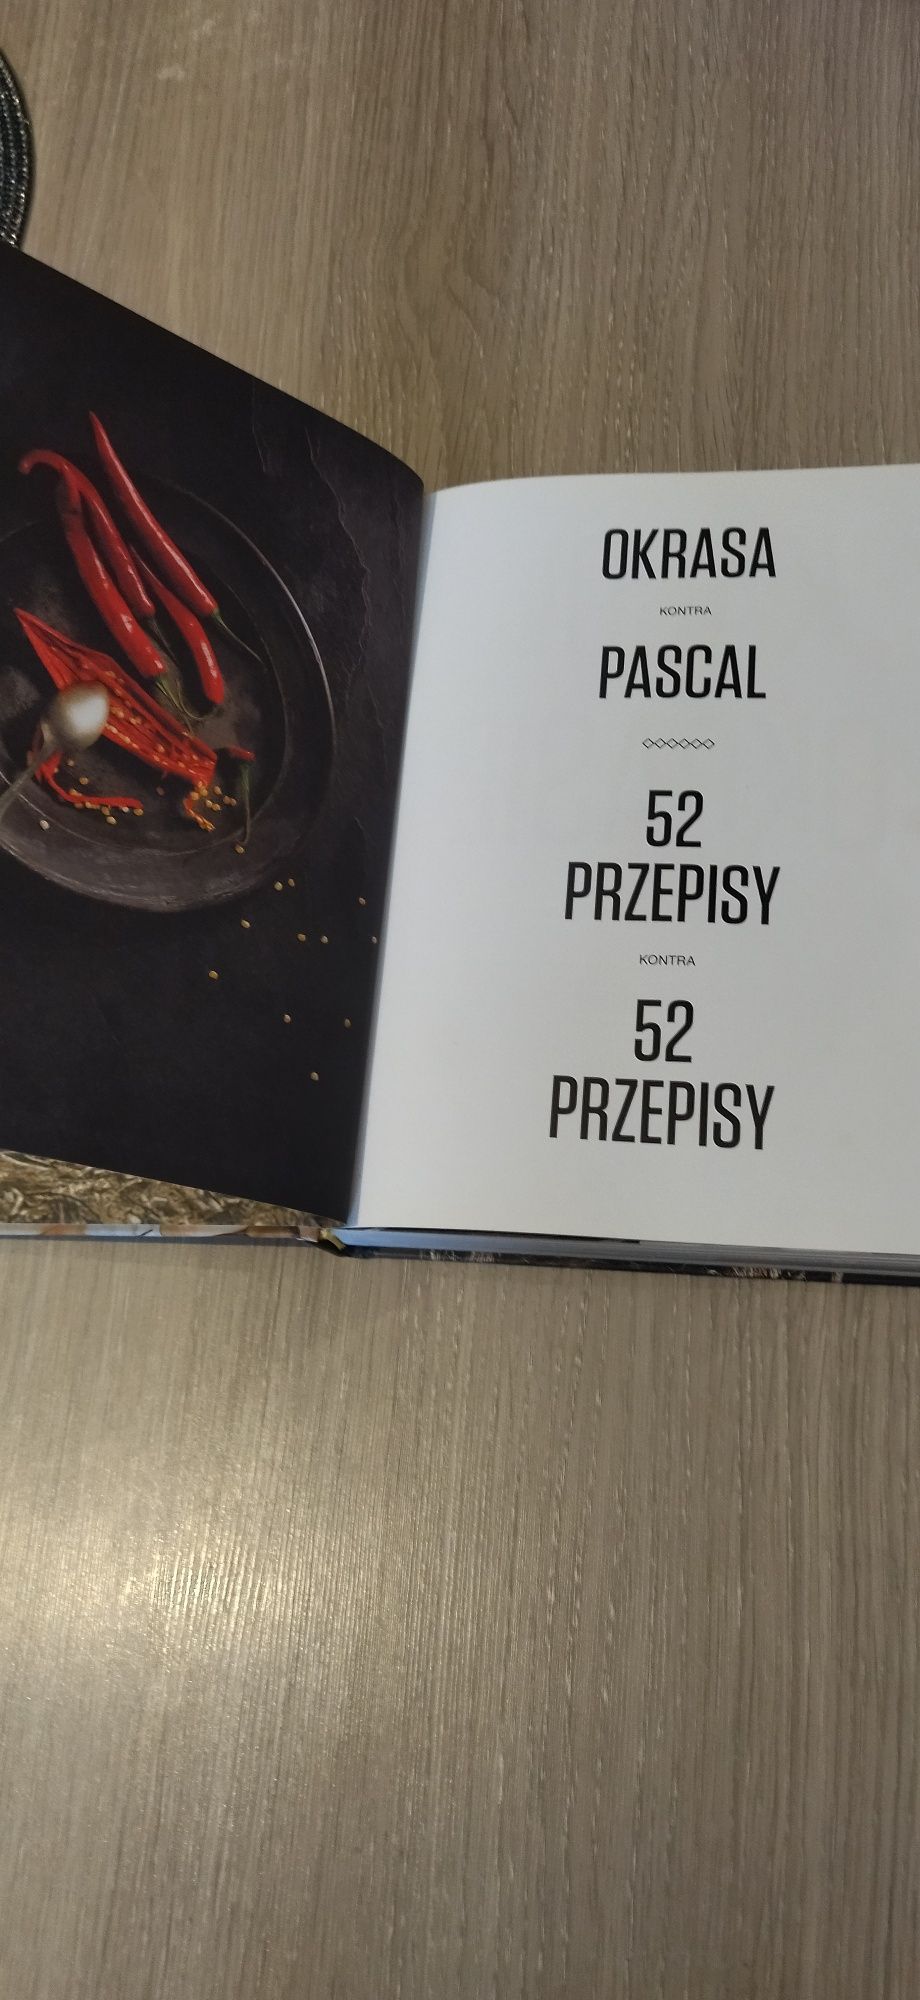 Kuchnia Lidla Paskal Okrasa